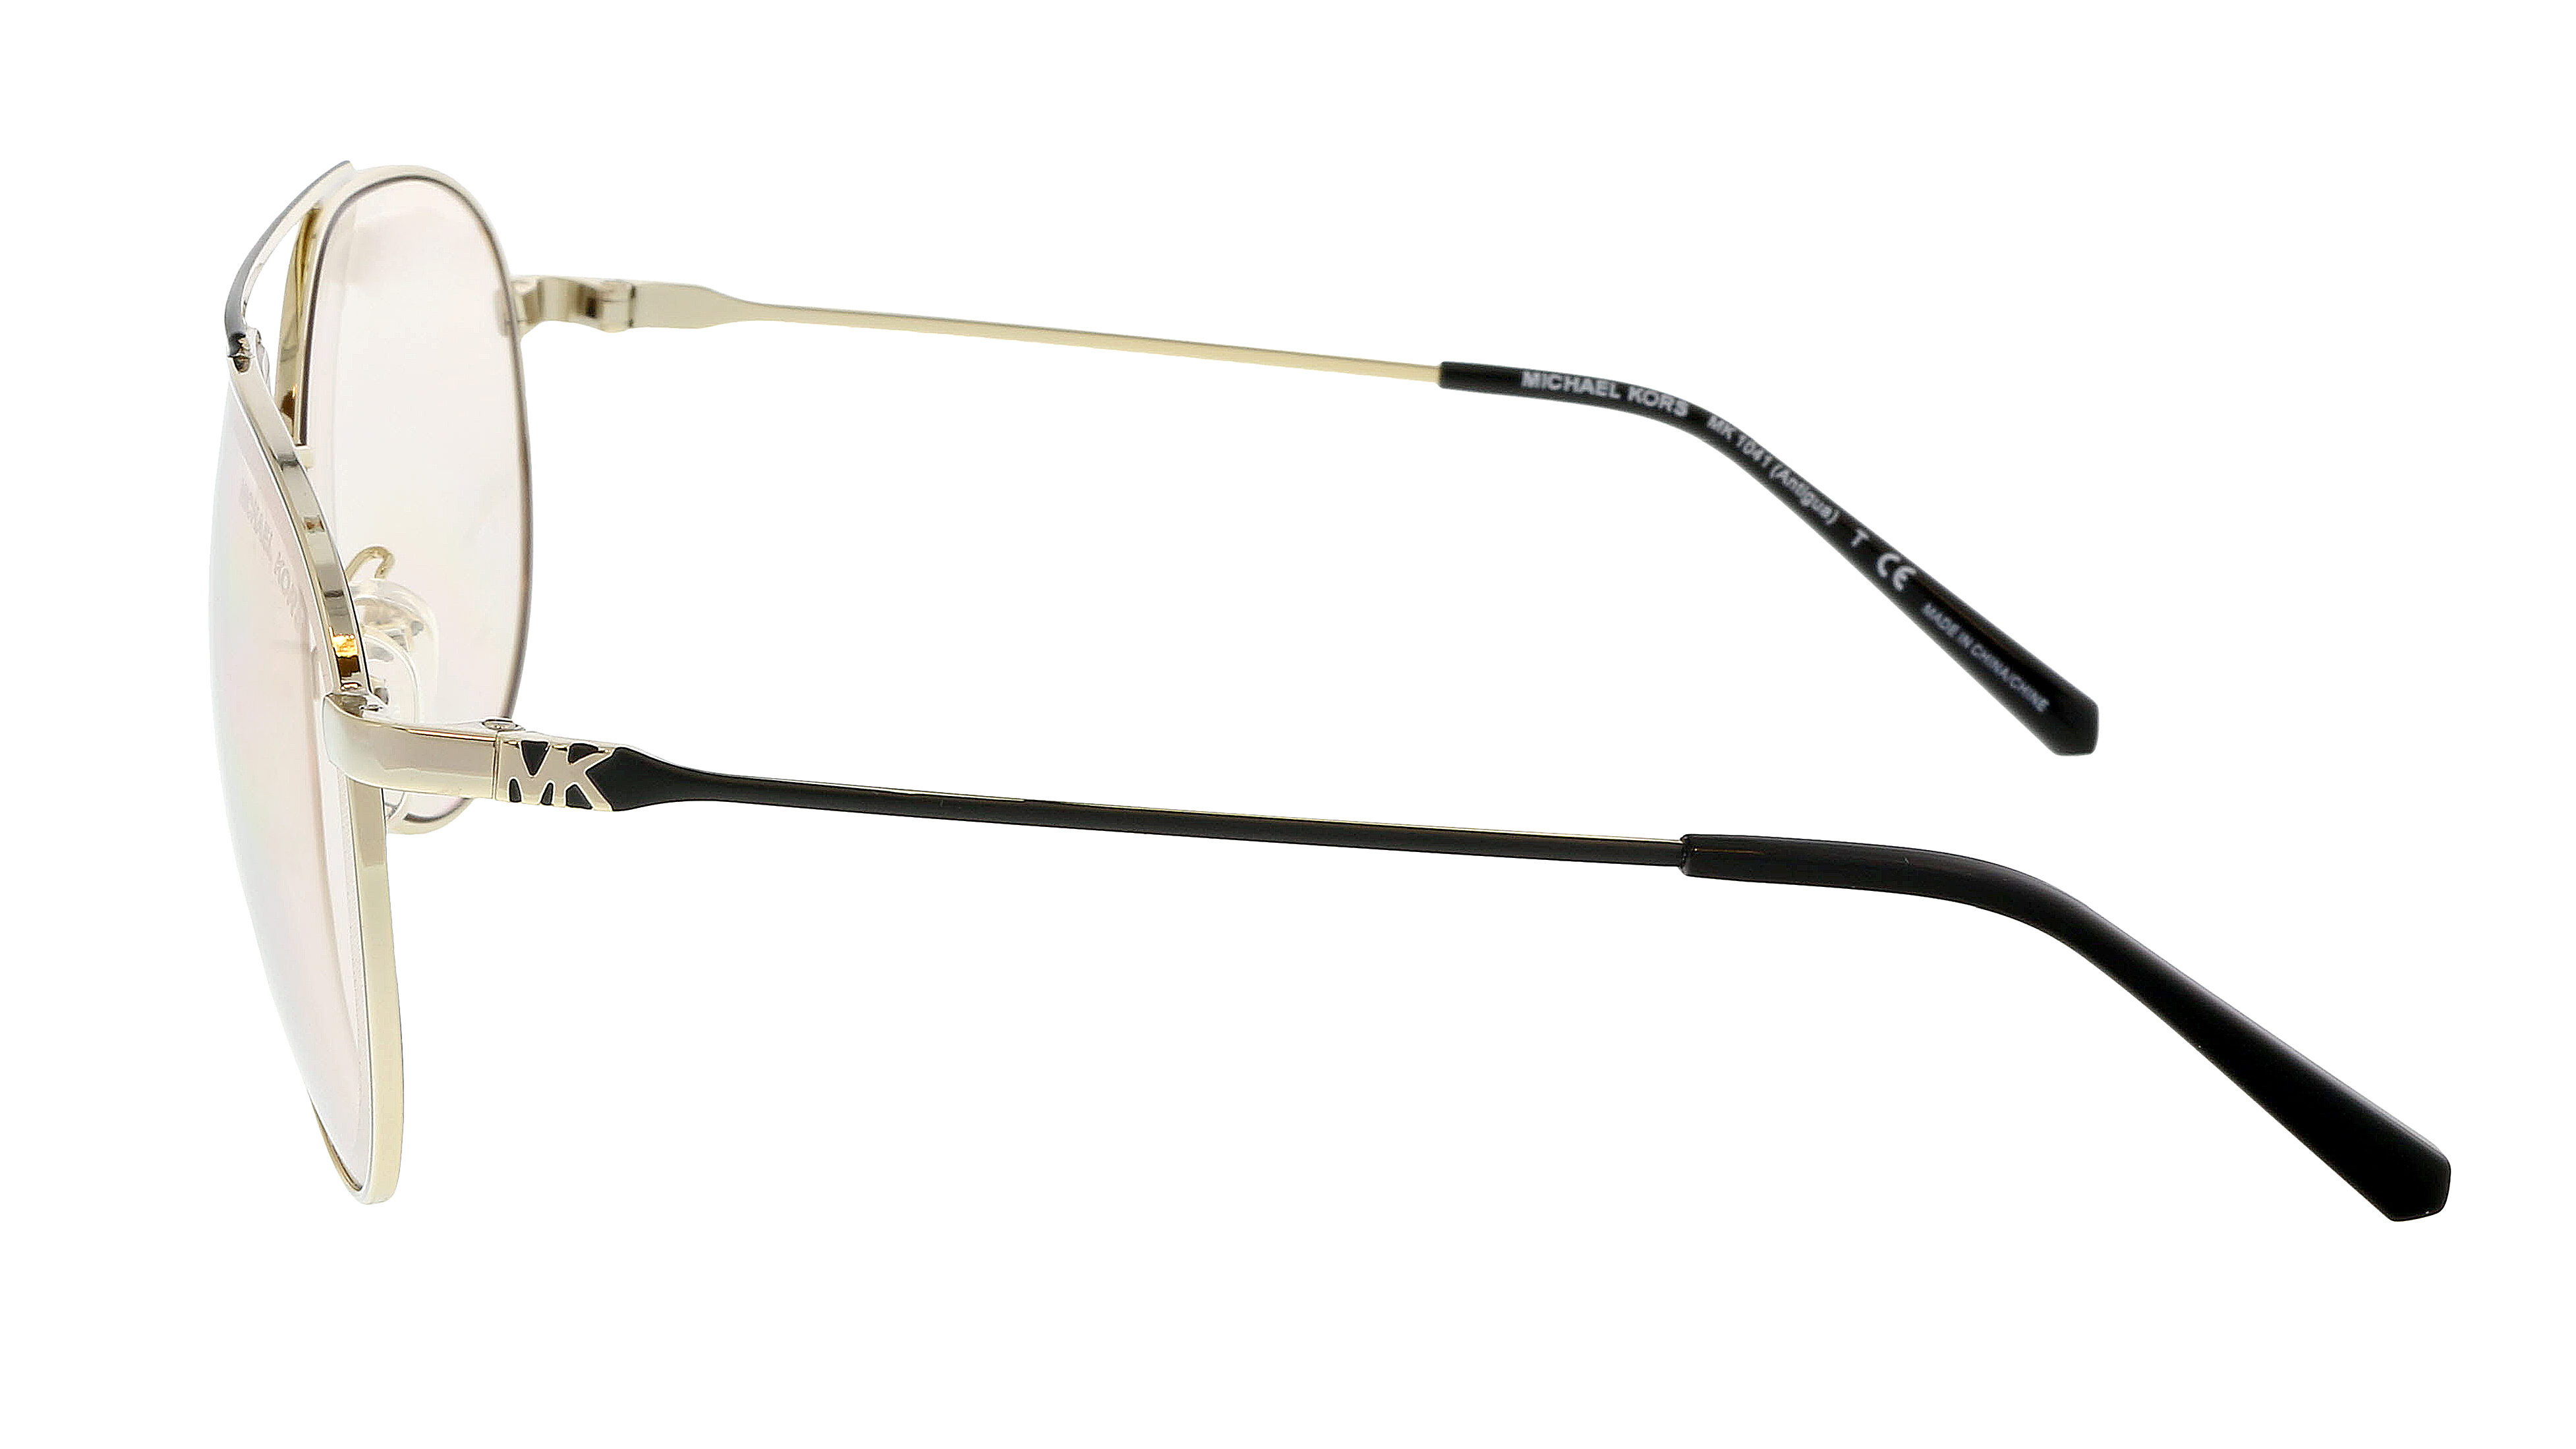 Michael Kors ANTIGUA MK1041 Sunglasses 101473-60 - Men's, Shiny Pale Gold Frame, MK1041-101473-60 - image 3 of 5